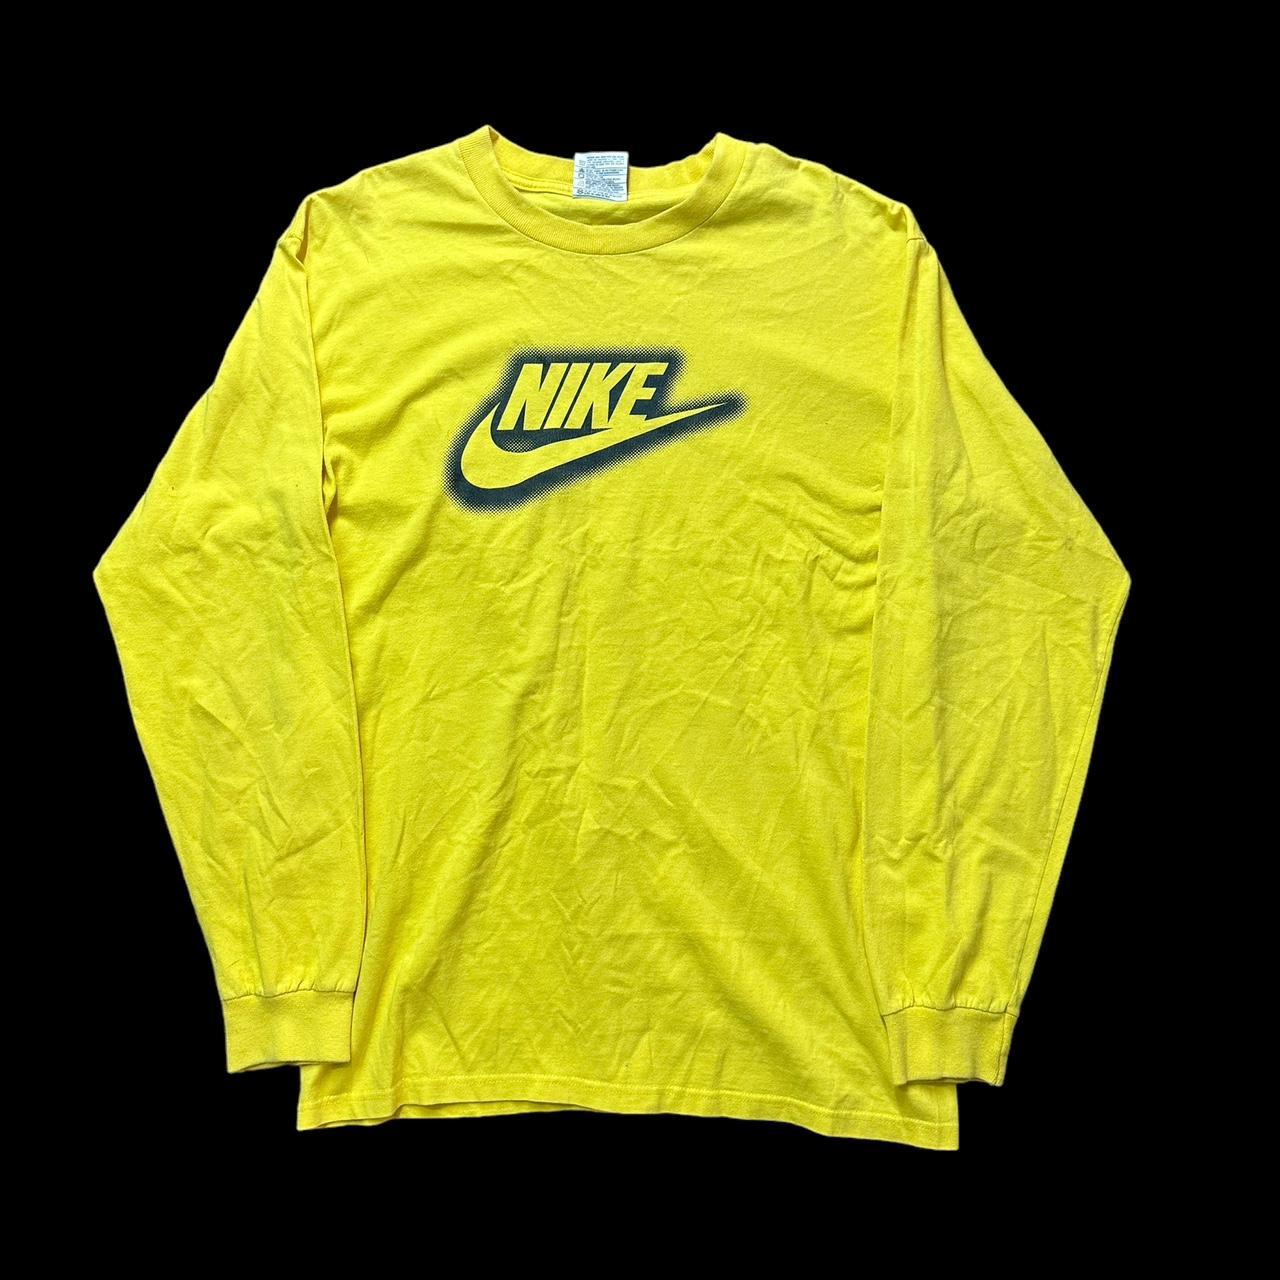 Nike Men's Yellow and Black T-shirt